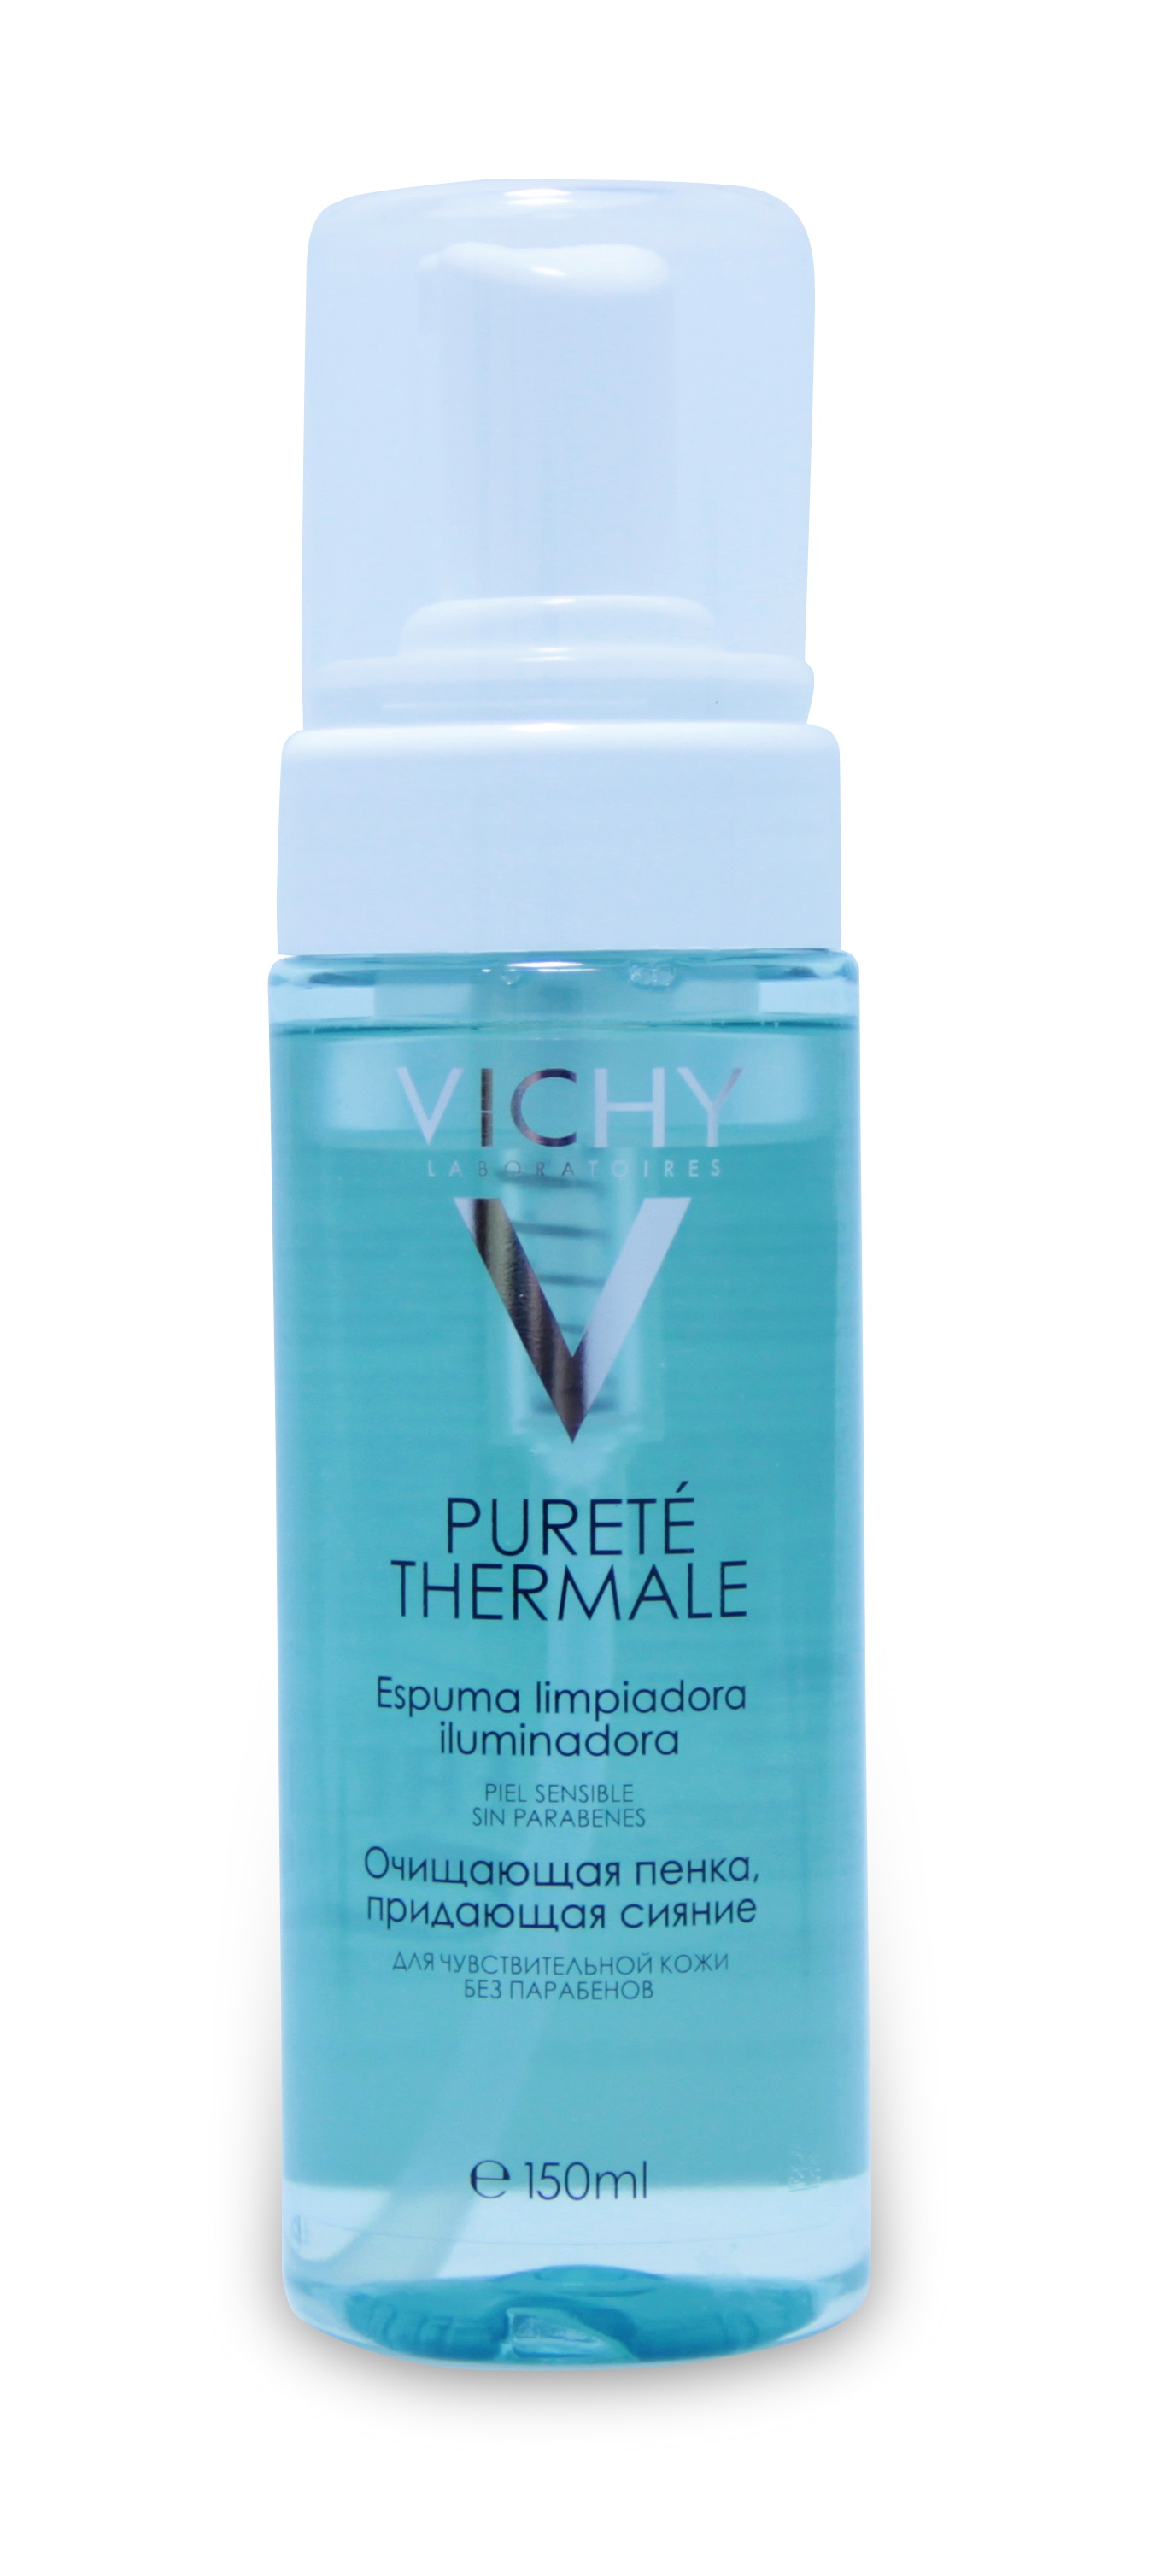 Vichy Purete Thermale Пенка Очищающая 150 мл